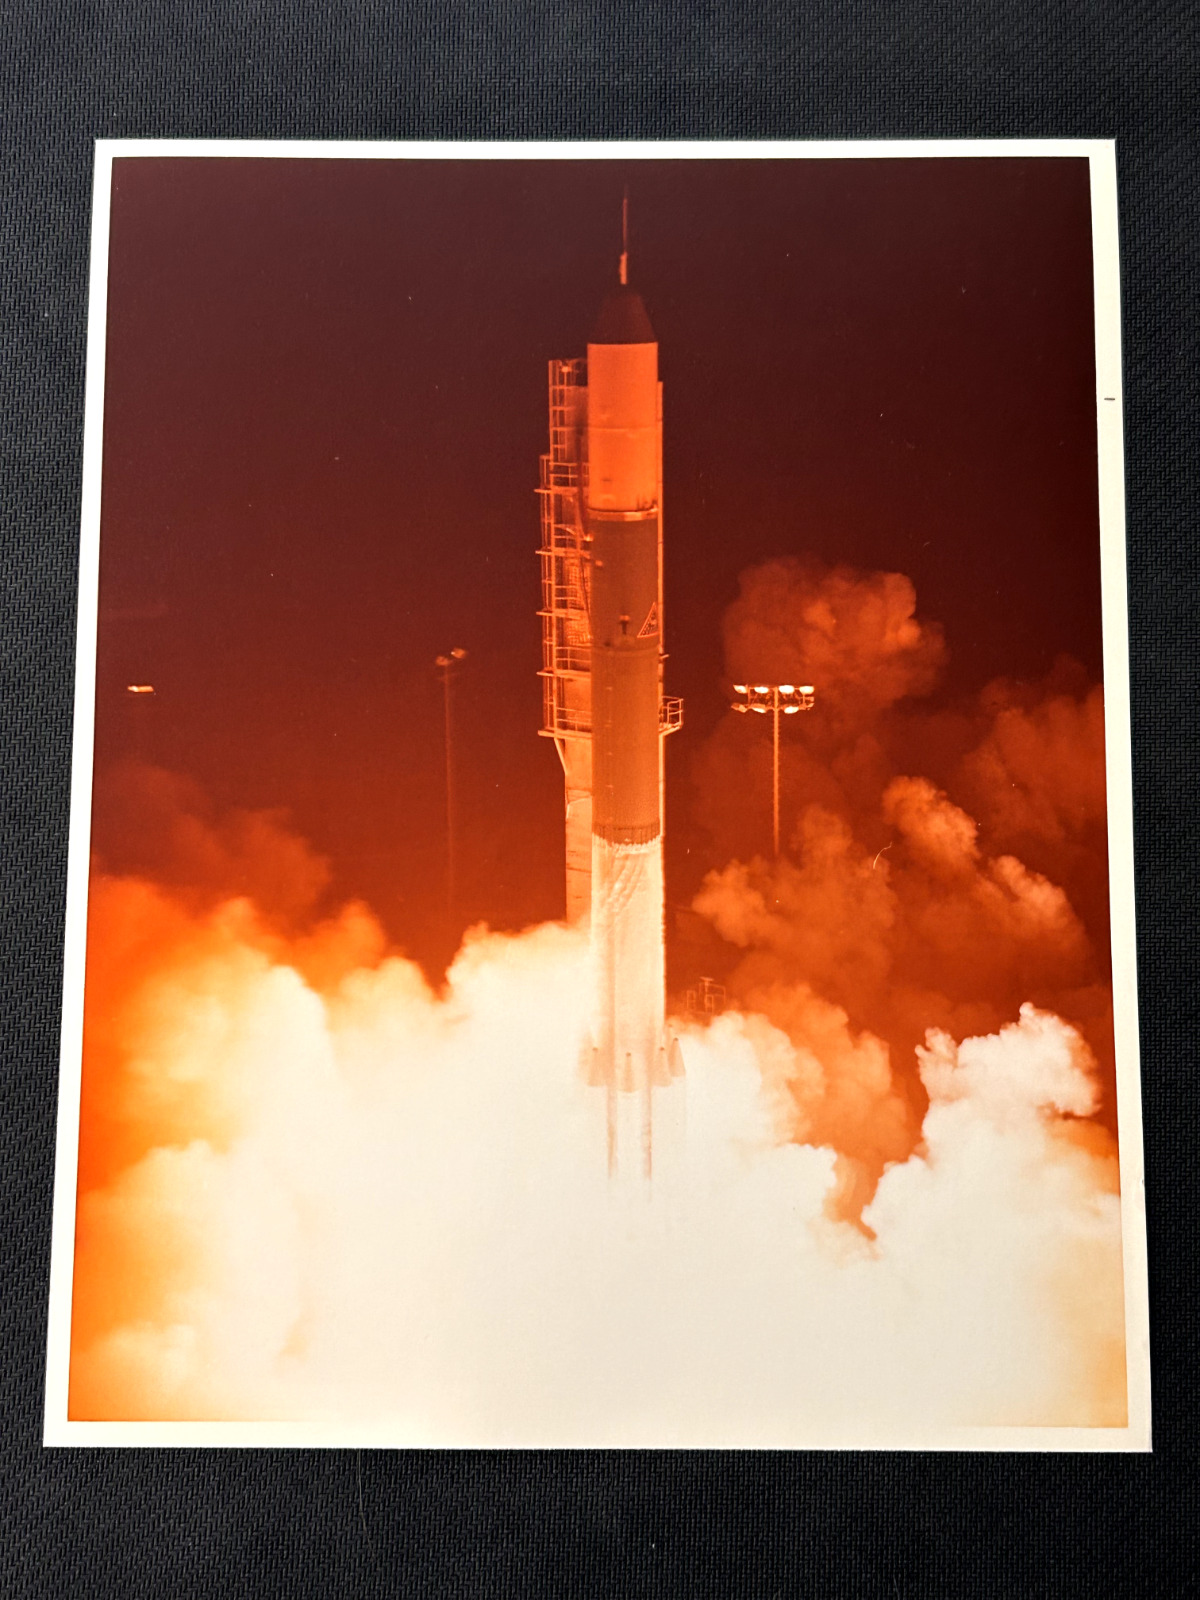 Nimbus 7 launched on October 24, 1978 VAFB launch Photo on Kodak paper